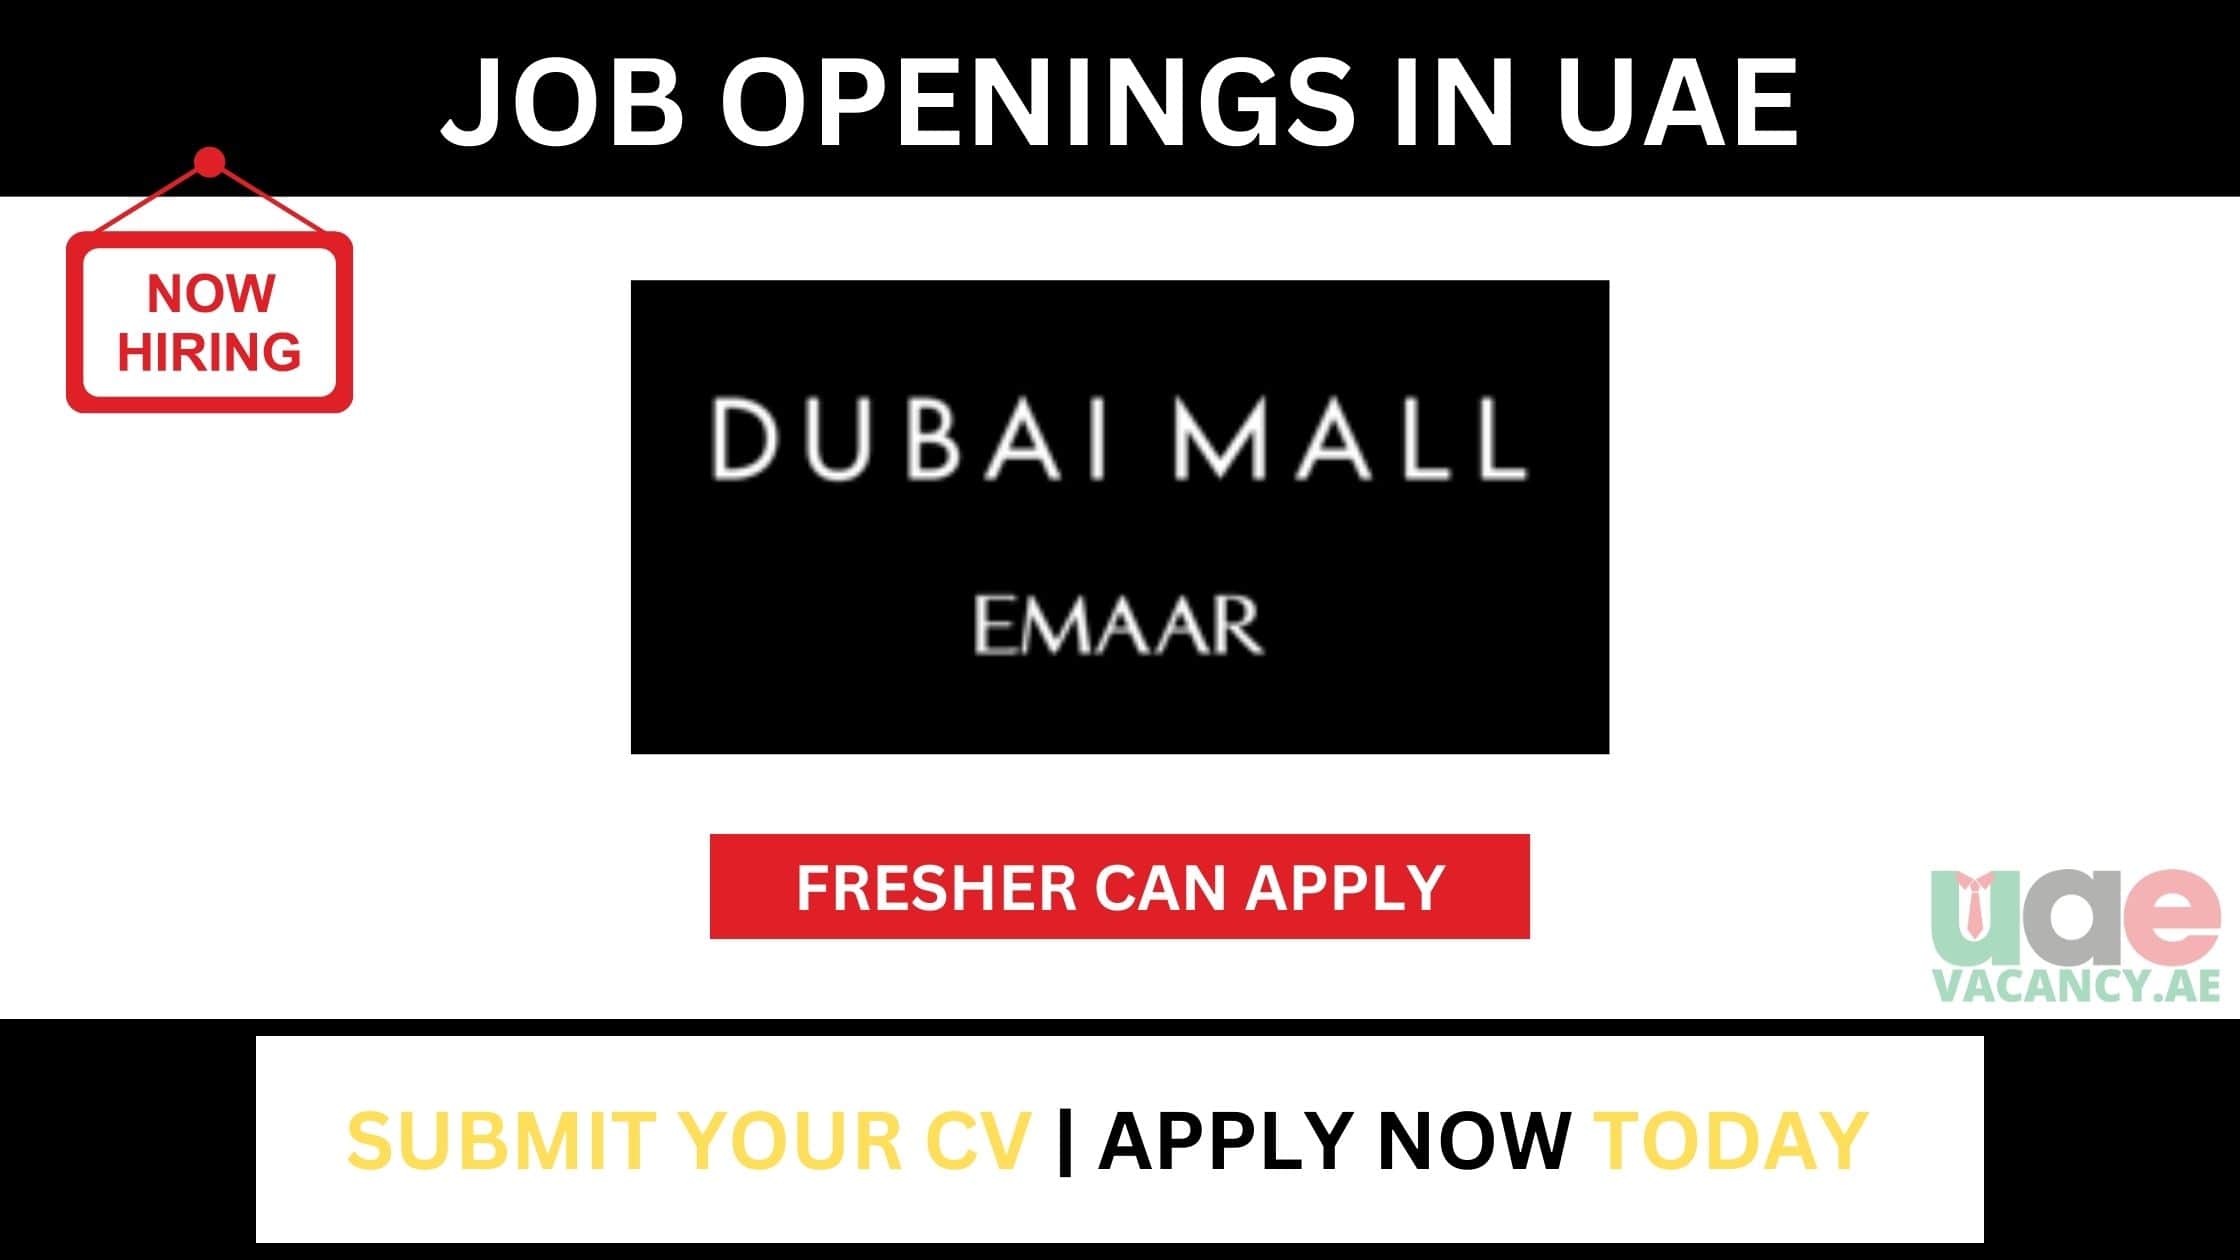 Dubai Mall Careers in UAE